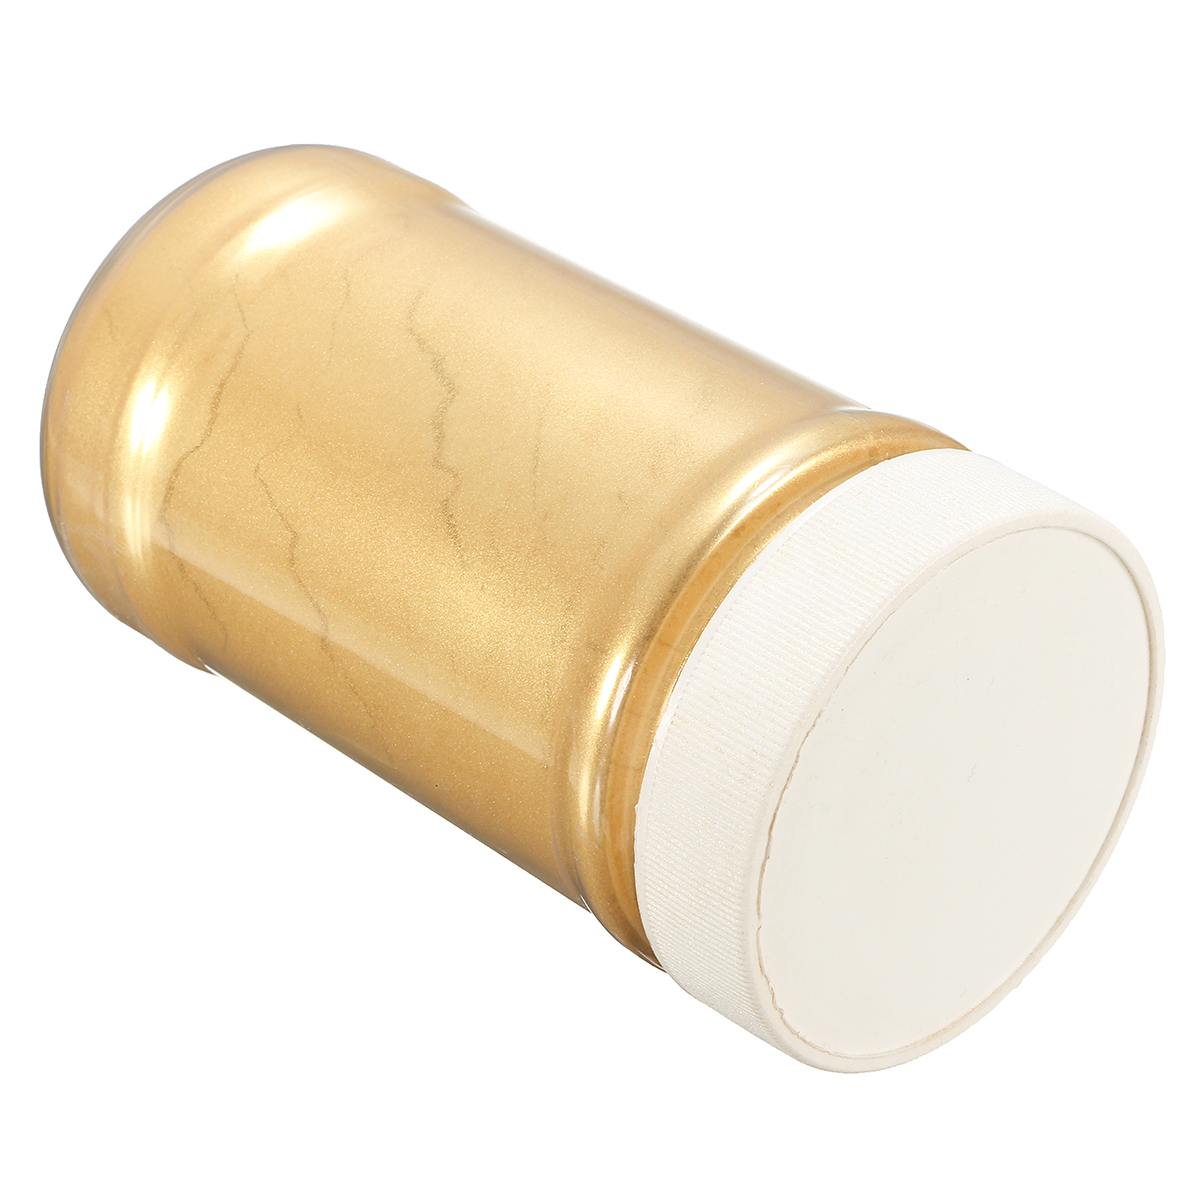 100g-Gold-Ultrafine-Glitter-Pearl-Pigment-Powder-Metal-Sparkle-Shimmer-Paint-1302372